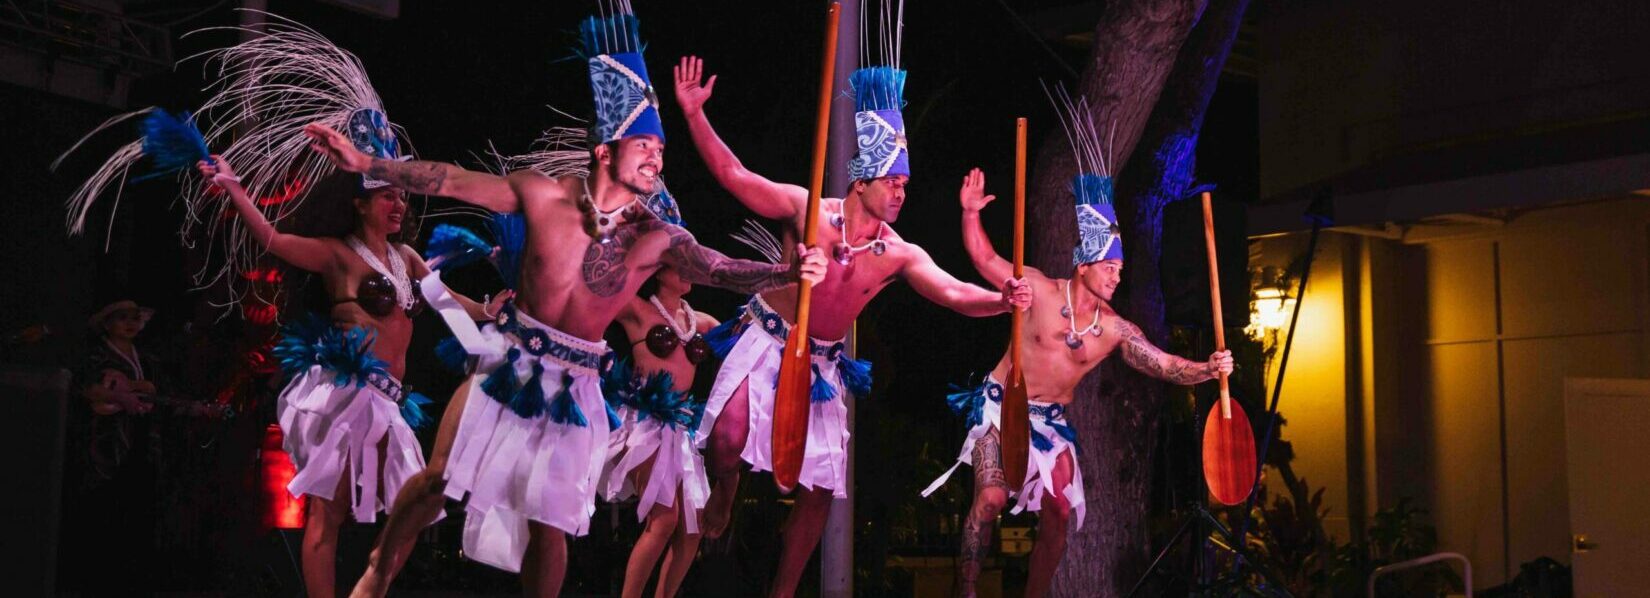 Performers in traditional costumes holding oars at Ka Moana Luau on Oahu, Hawaii